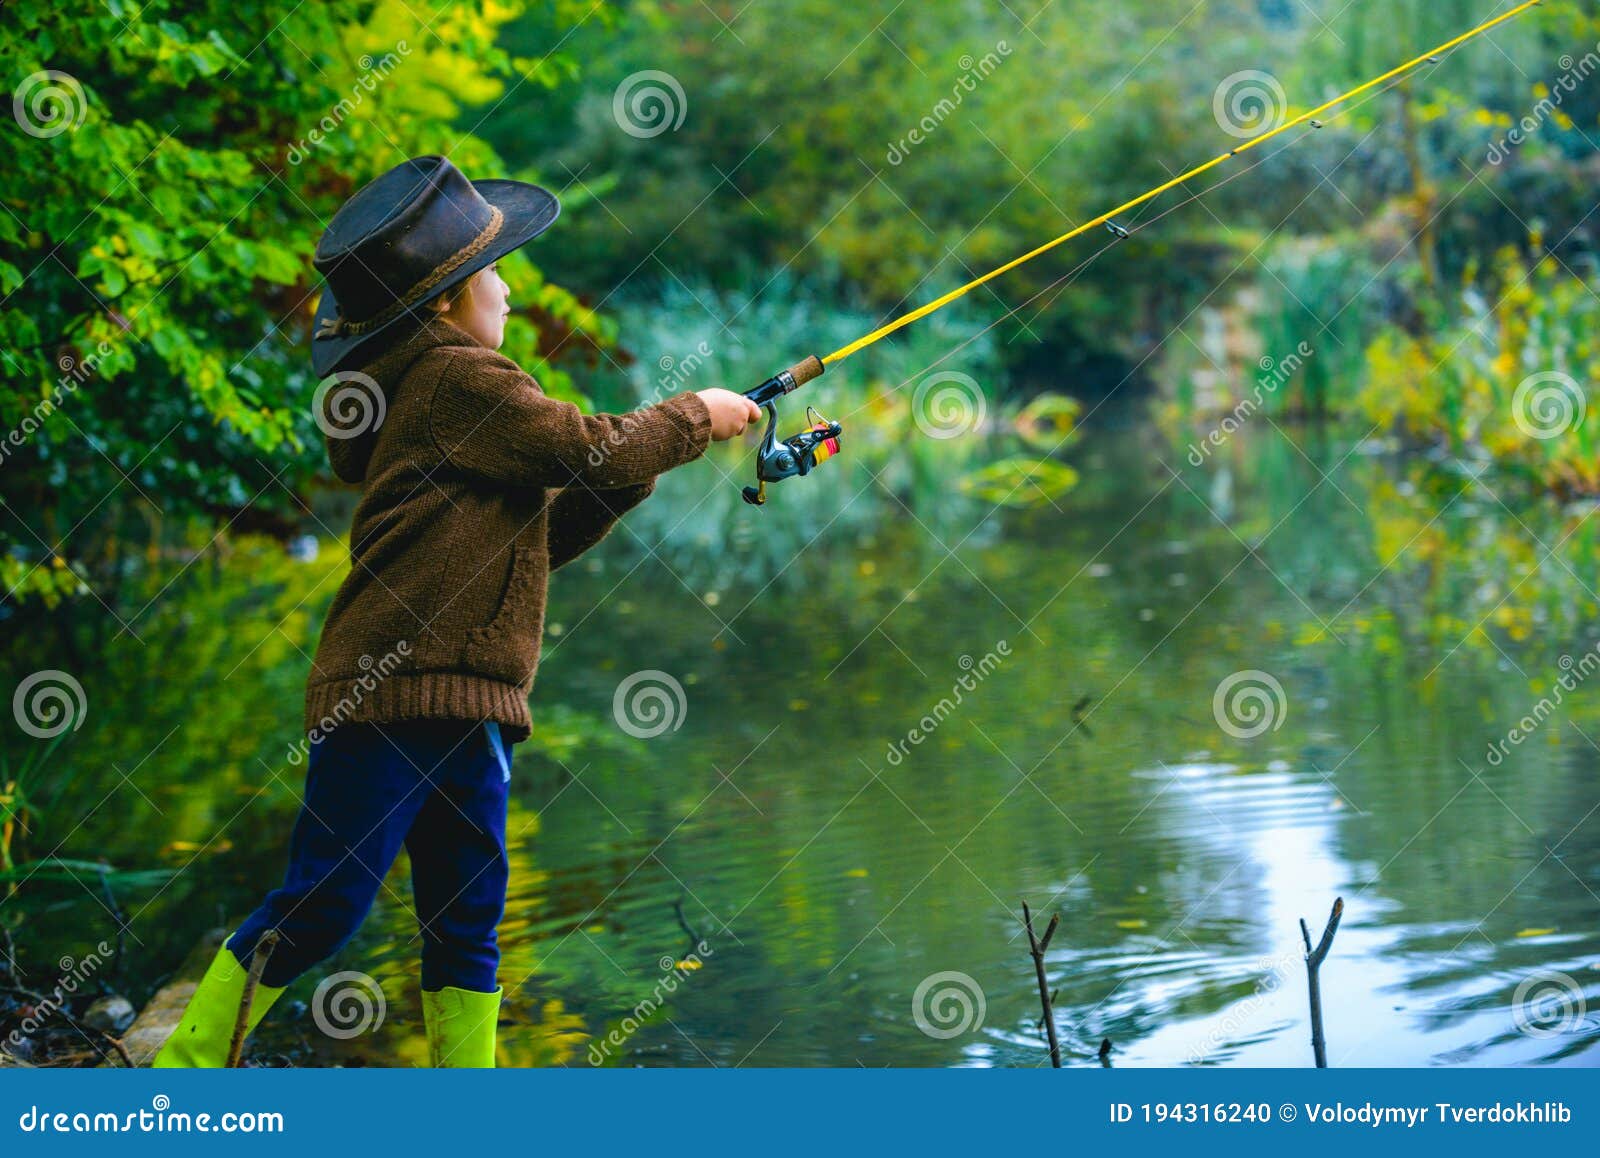 6,878 Boy Fish Kid Stock Photos - Free & Royalty-Free Stock Photos